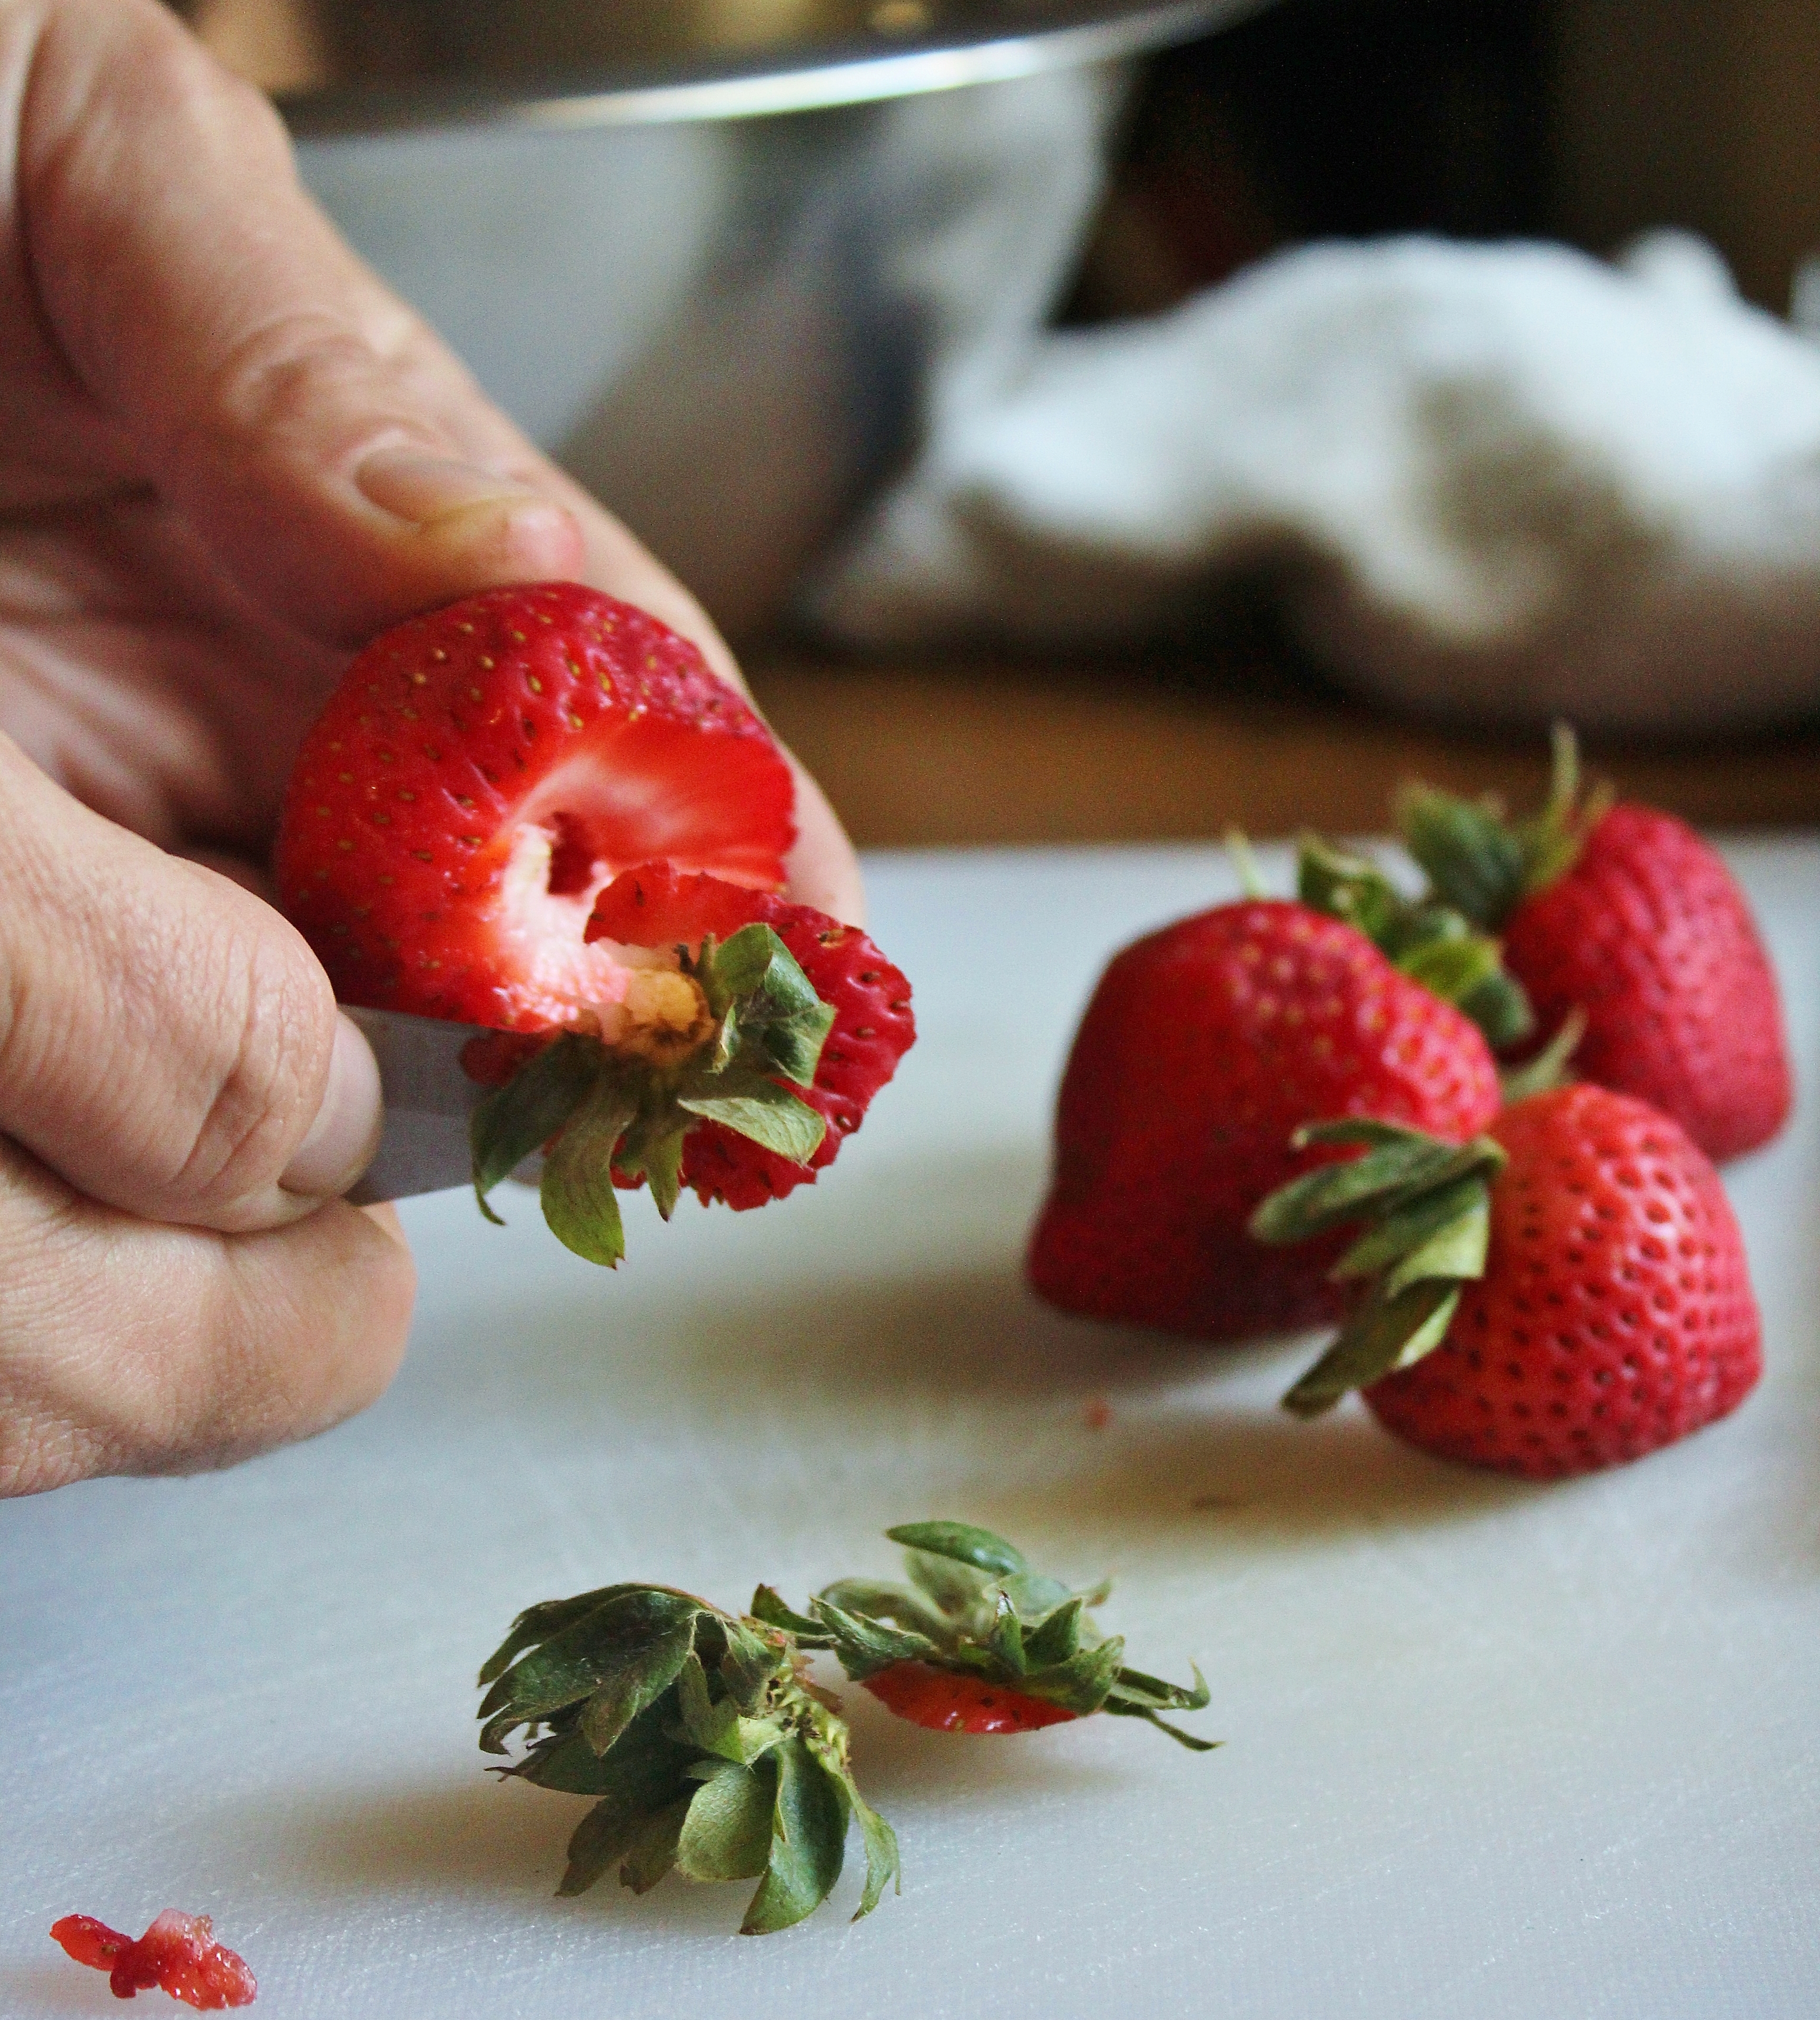 hulling the strawberries